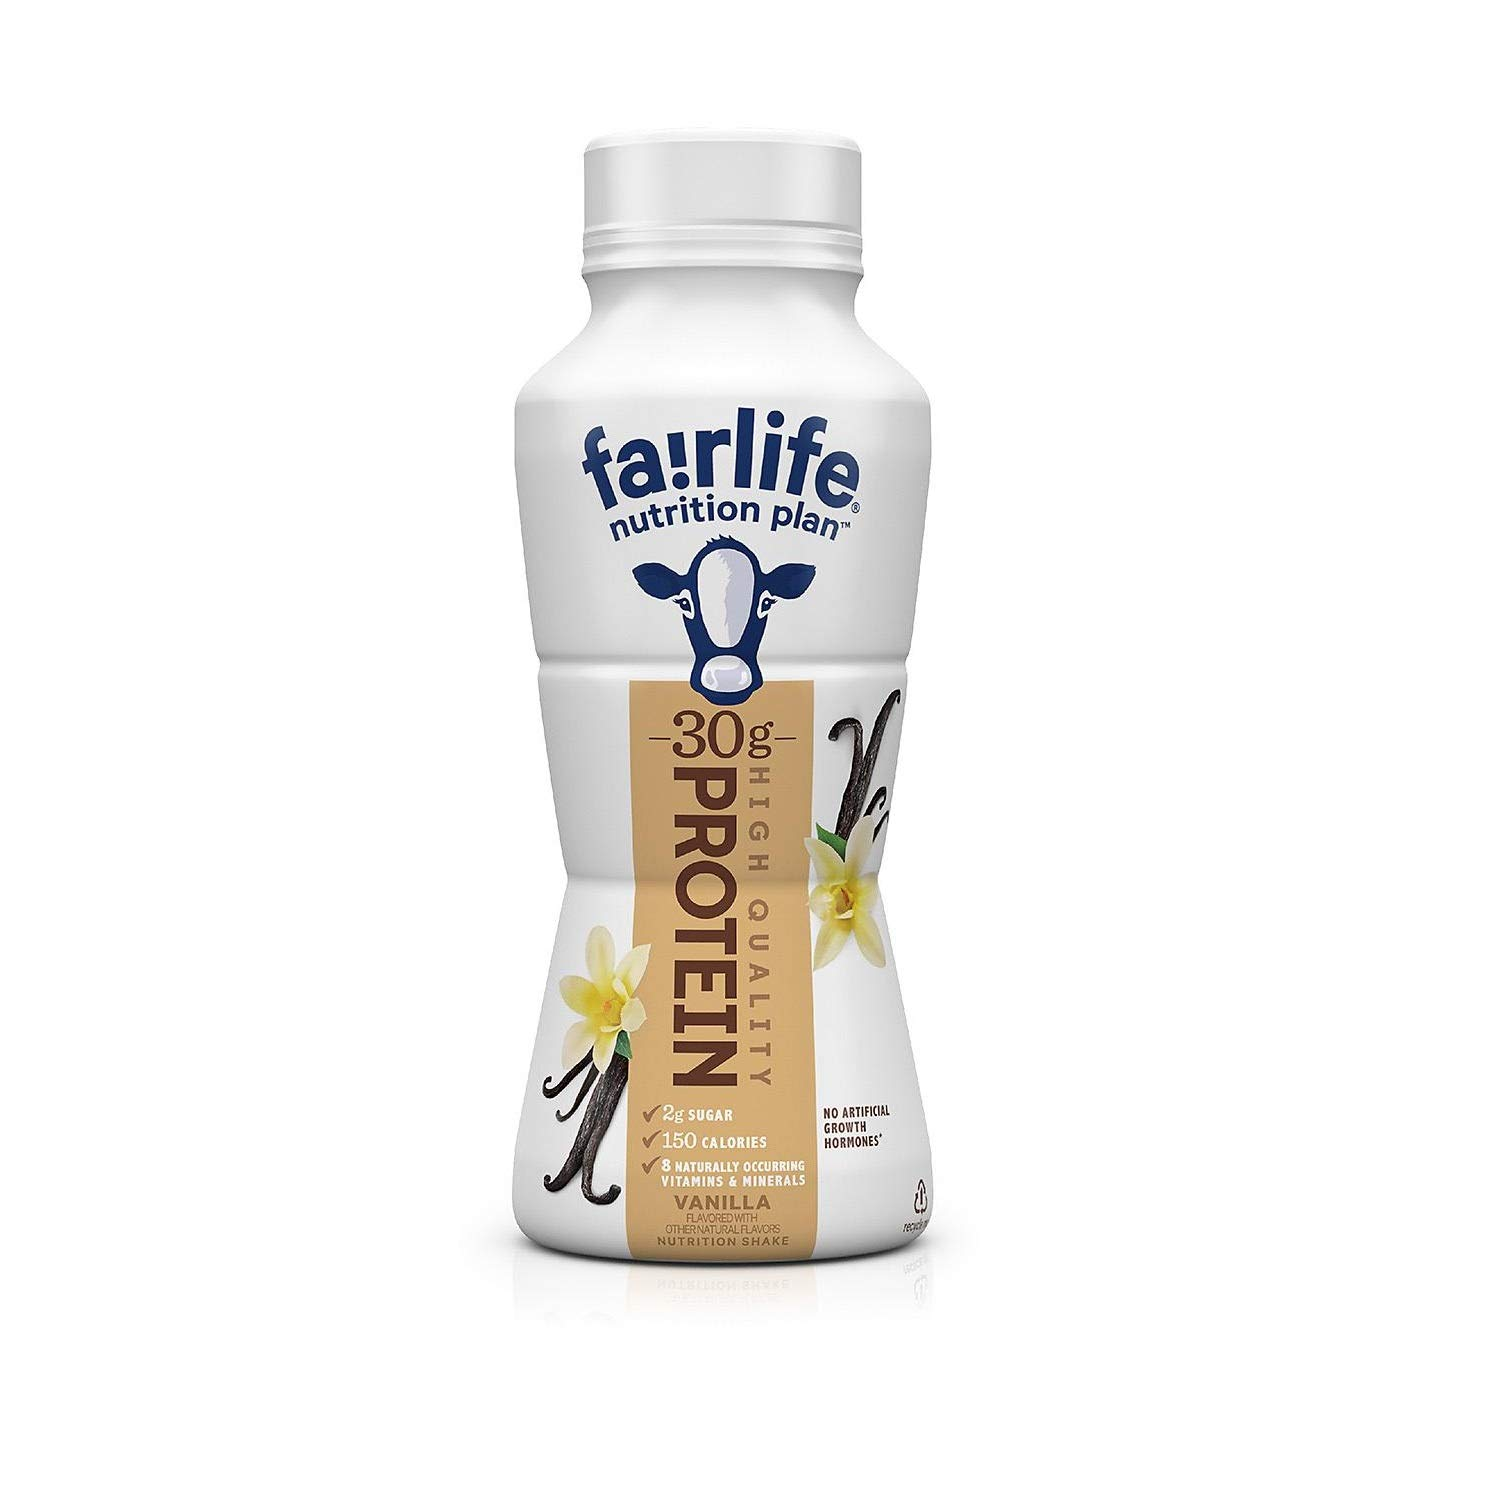 Fairlife Nutrition Plan High Protein Shake, 12 Pk (Vanilla)